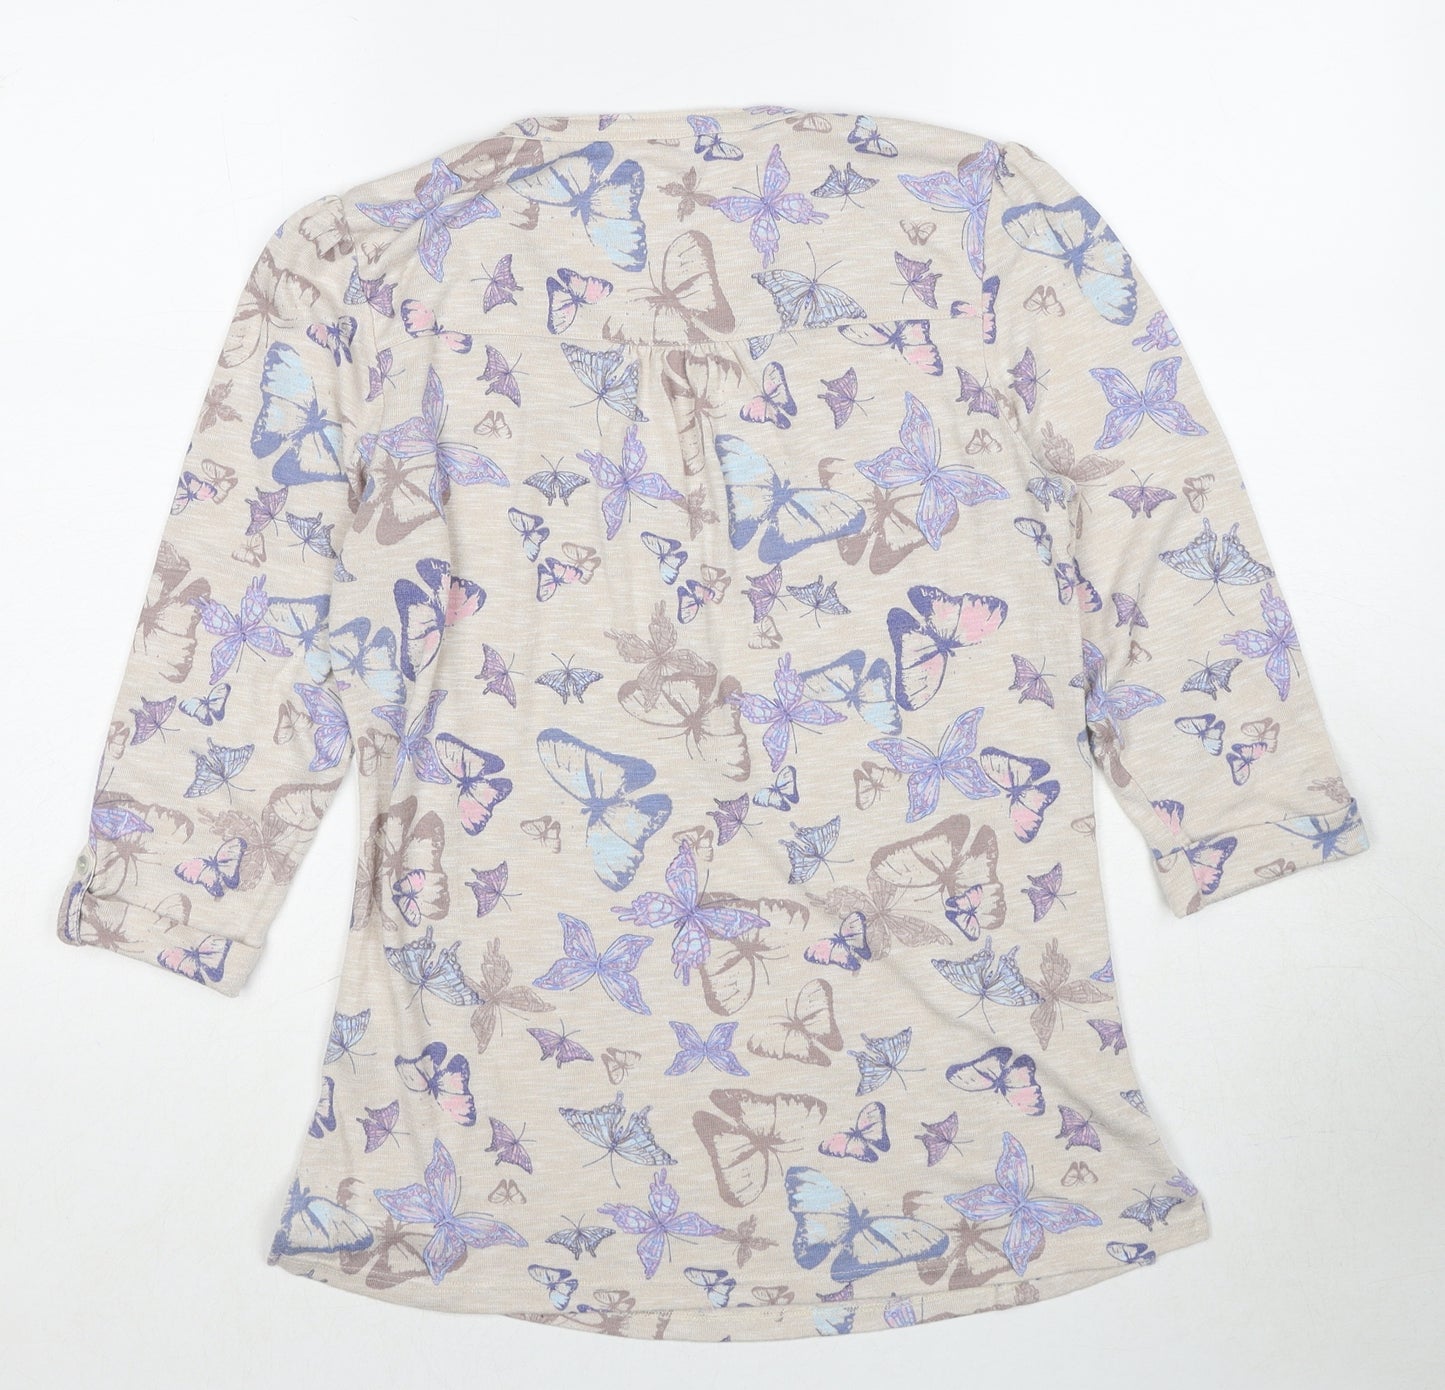 M&Co Womens Beige Geometric Polyester Basic Blouse Size 12 V-Neck - Butterfly Pattern